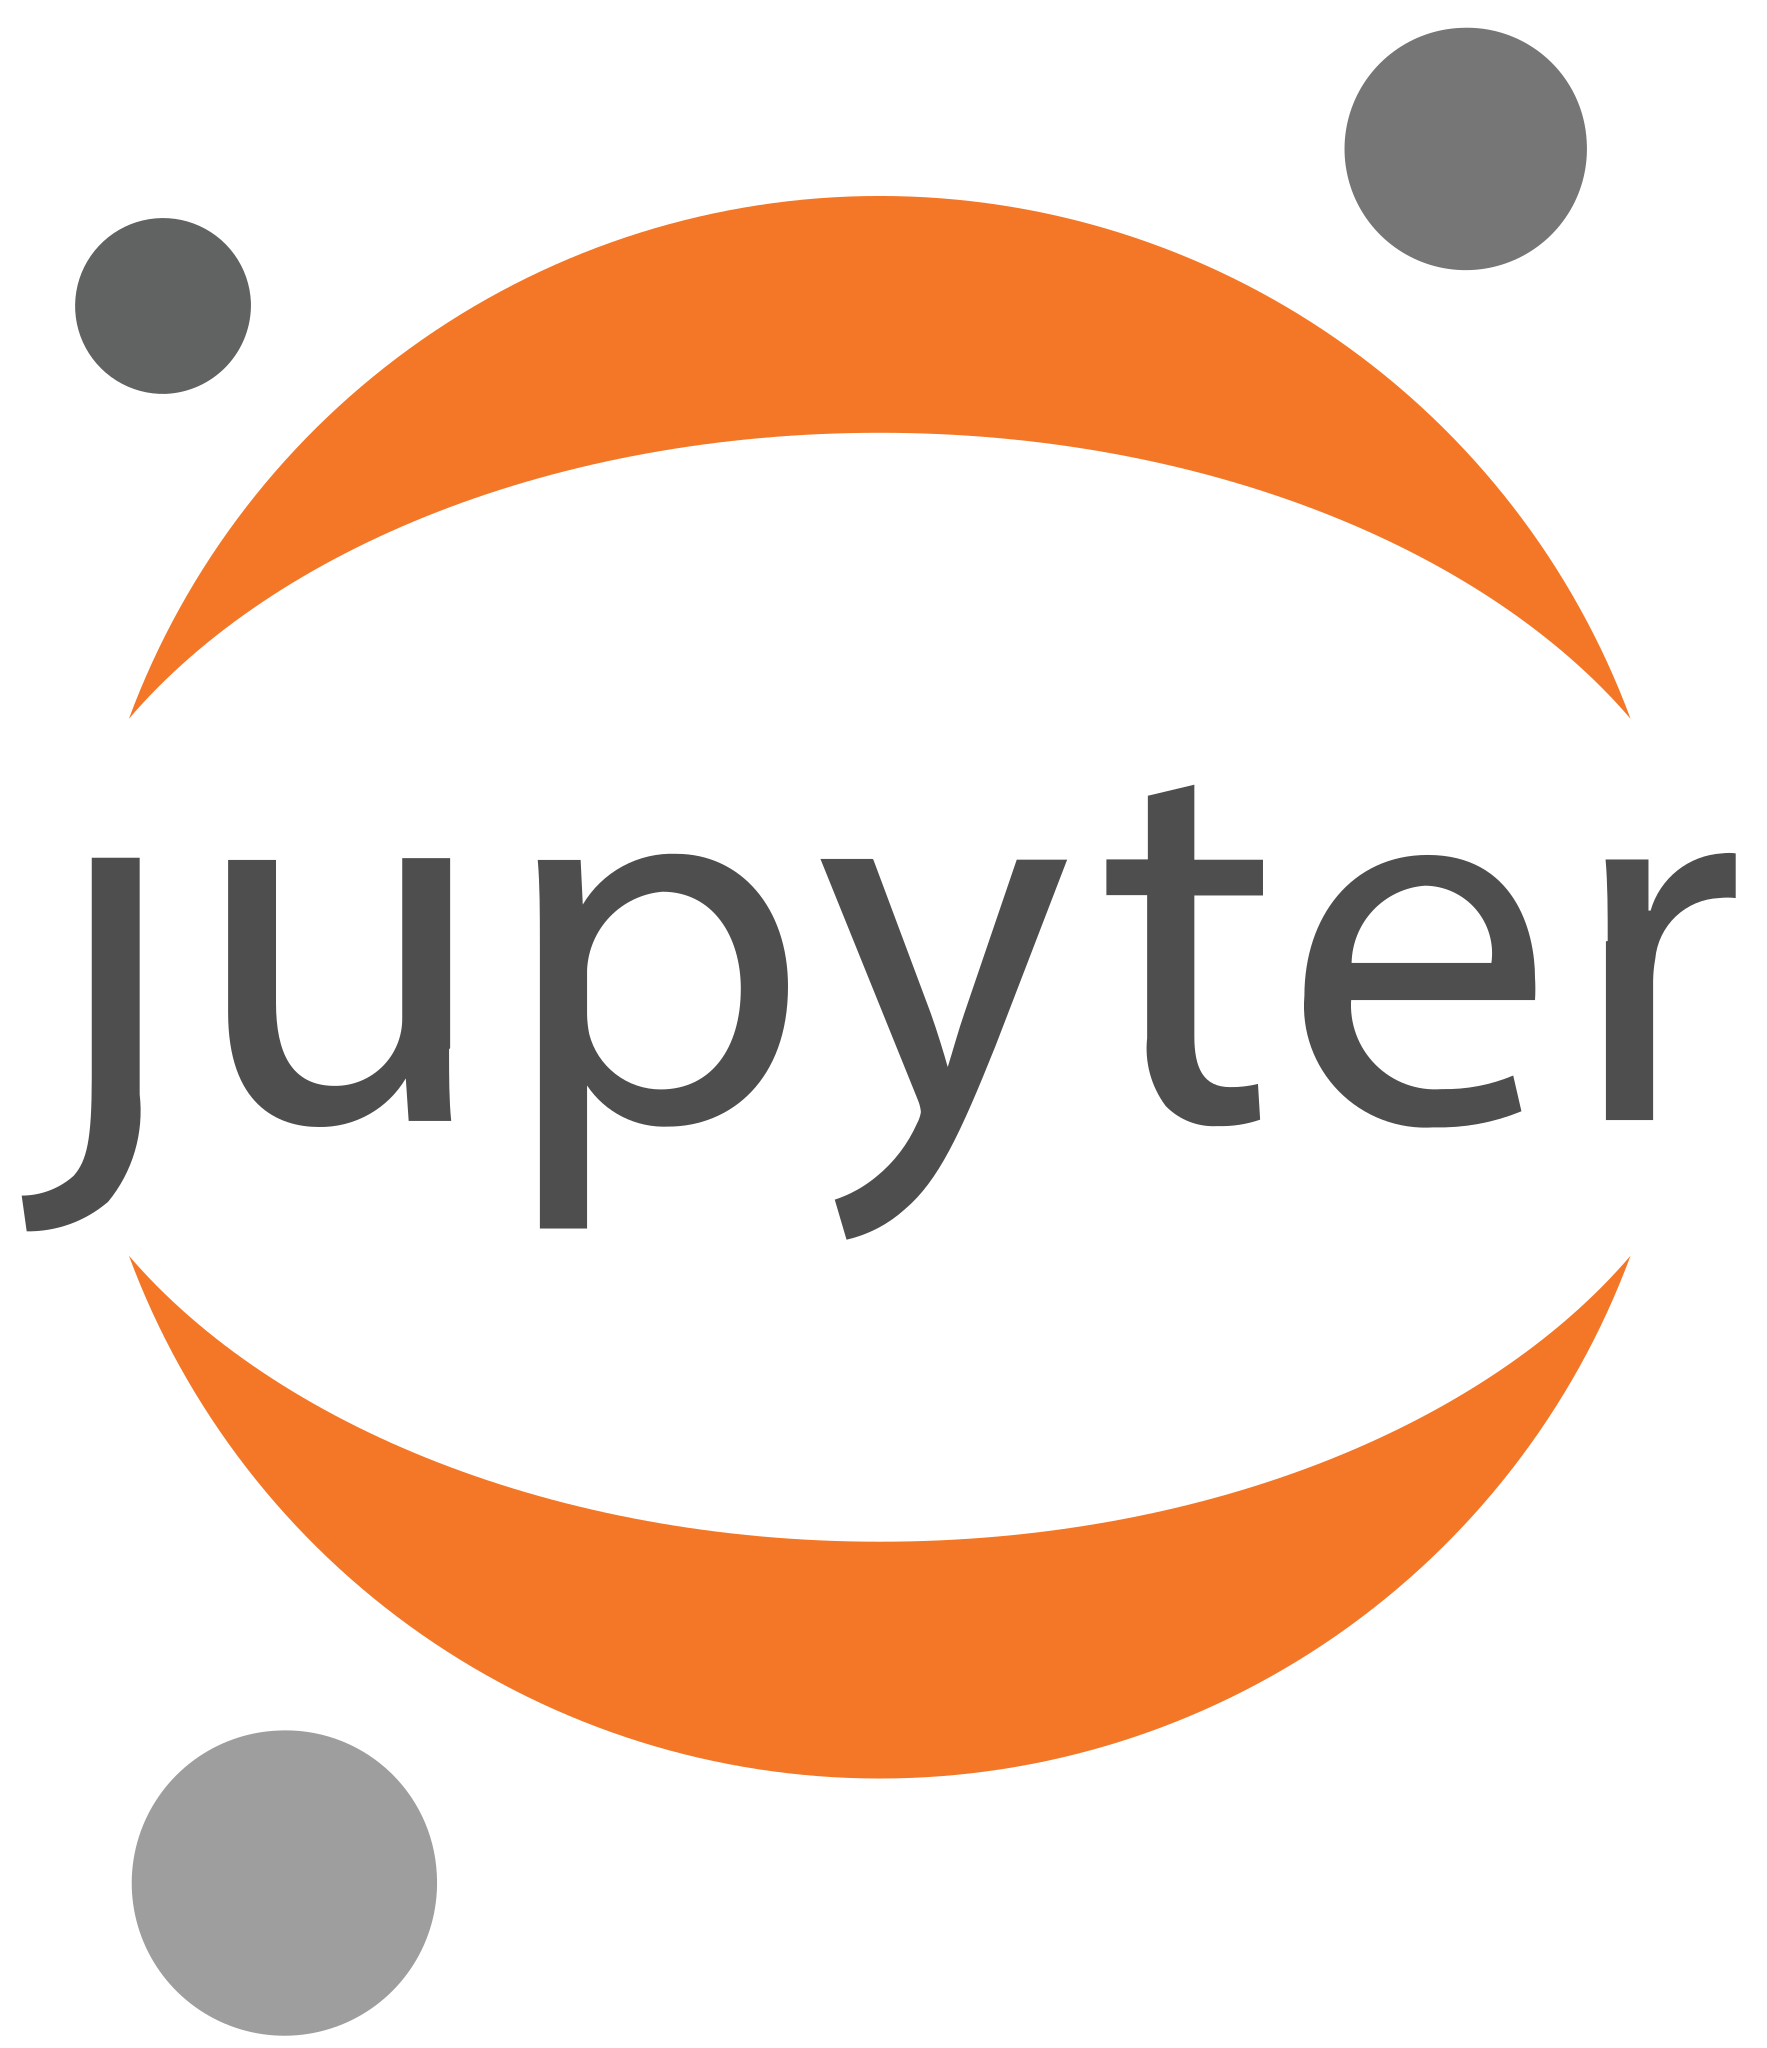 Jupyter notebook logo